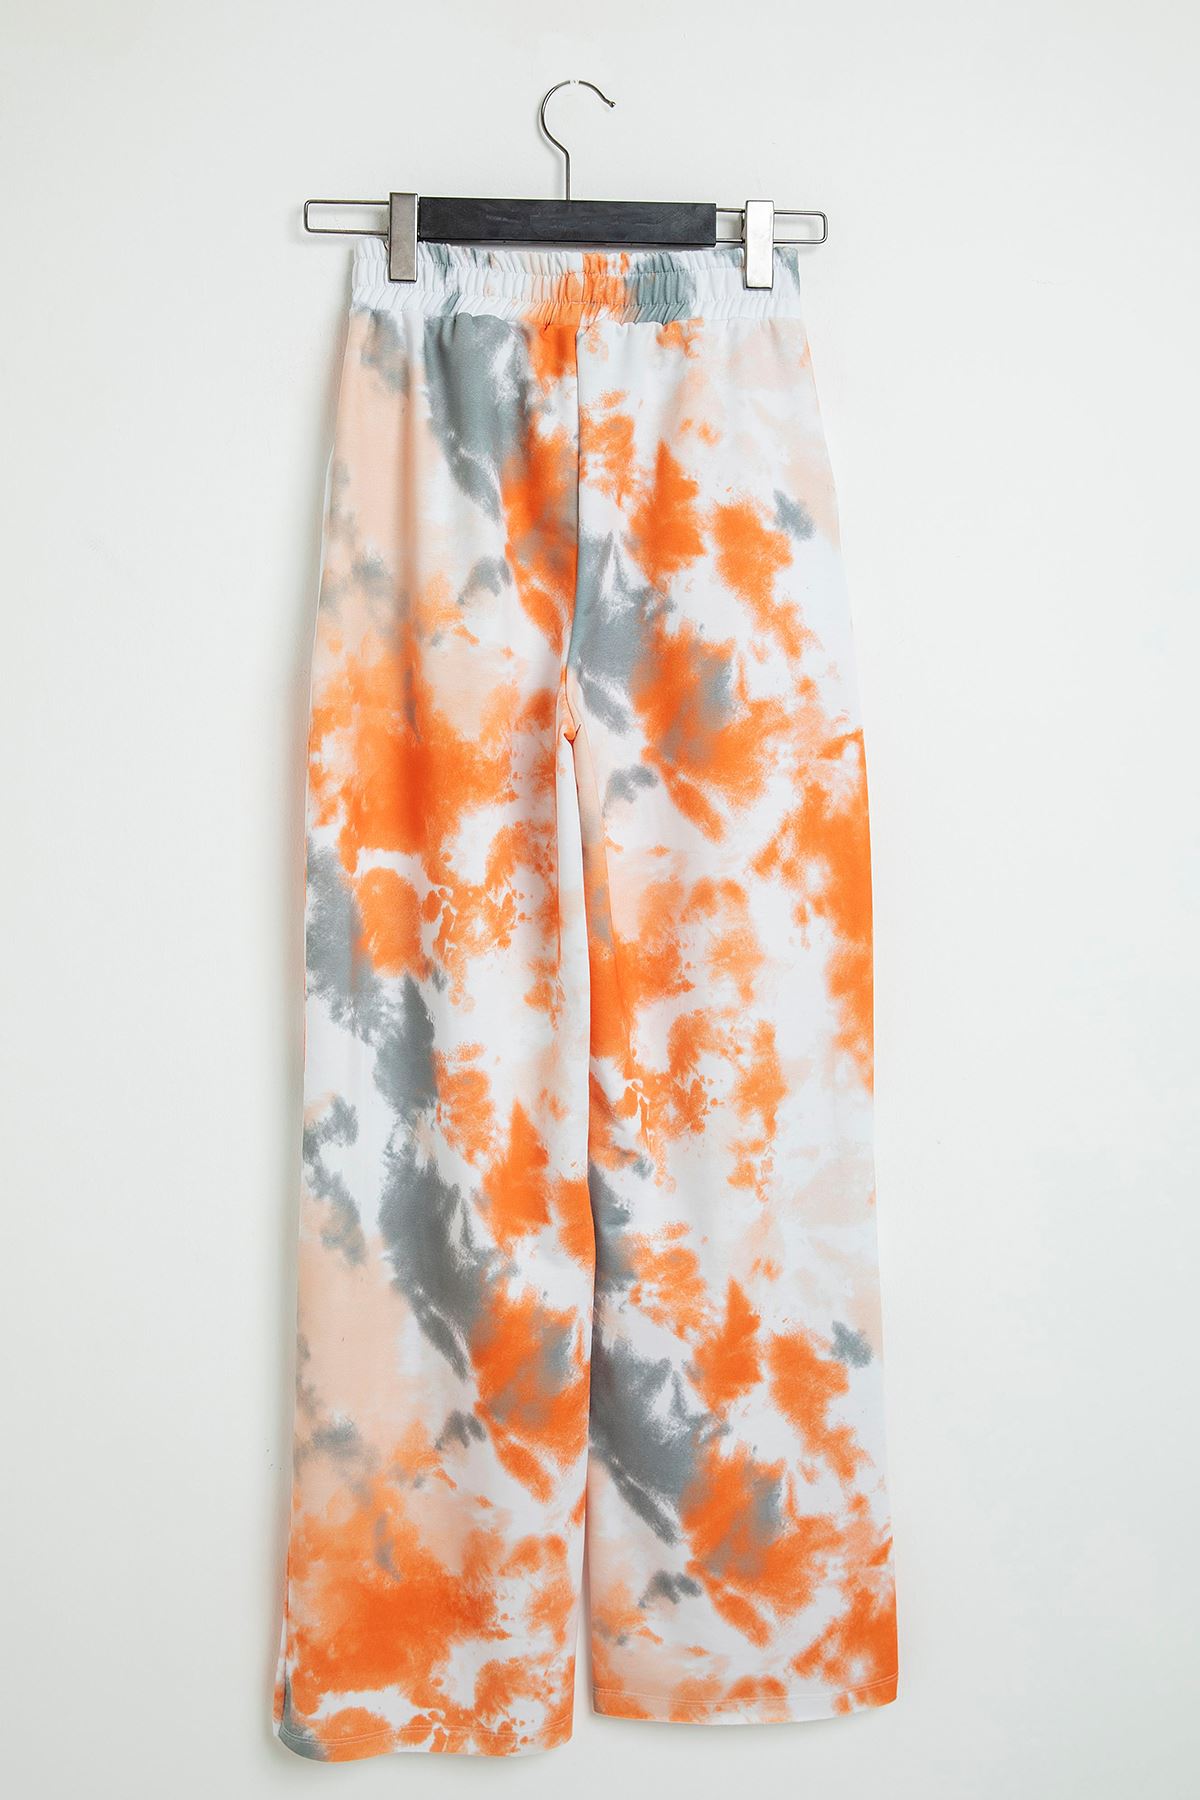 Double Knit Fabric Loose Tie-Dye Print Women'S Sweatpant - Orange